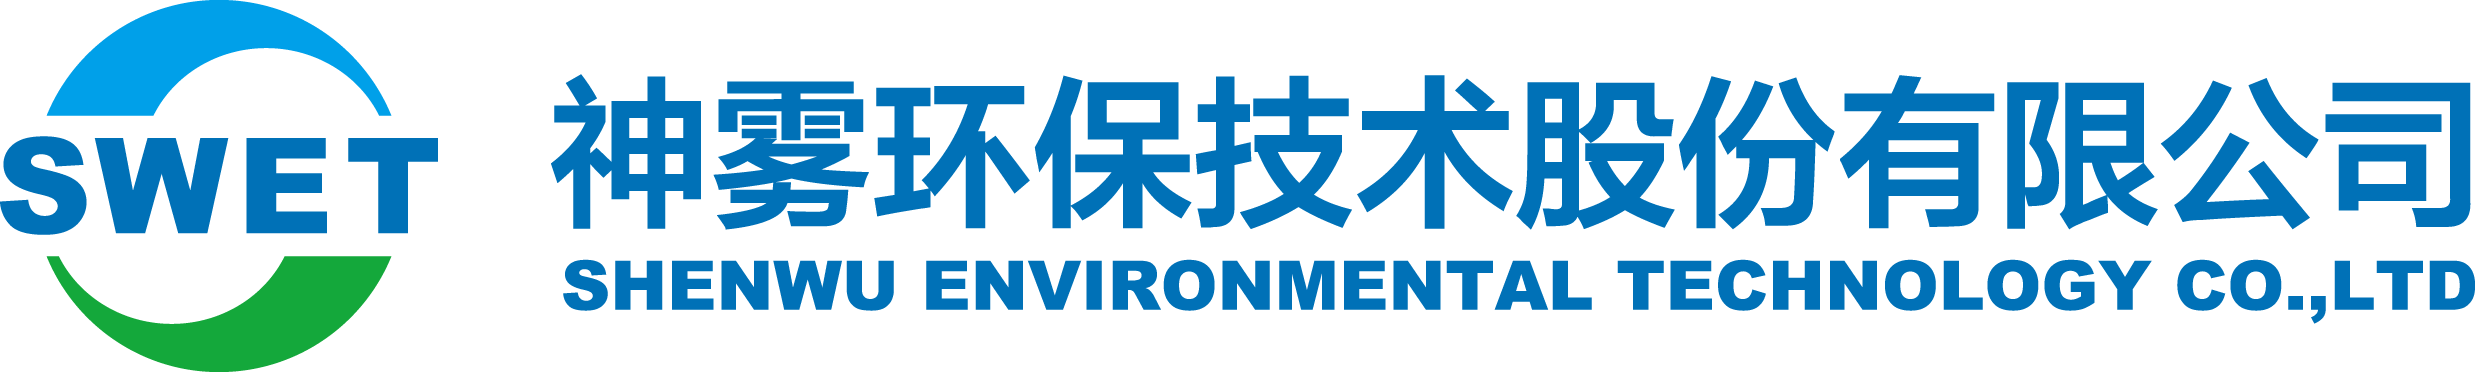 Shenwu Environmental Technology Co., Ltd.